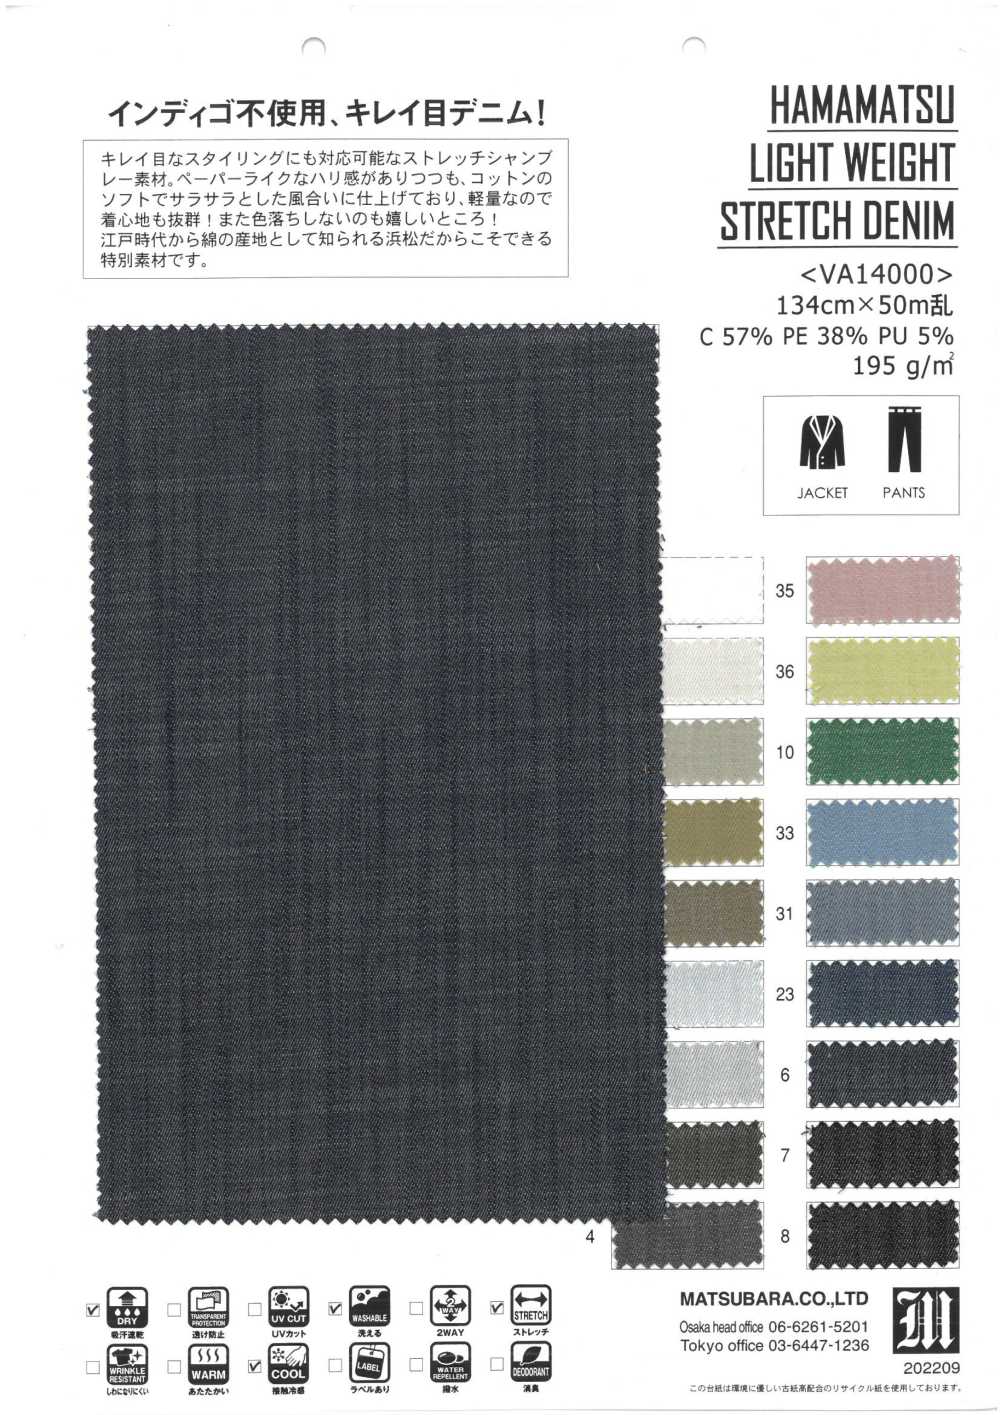 VA14000 DENIM STRETCH LÉGER HAMAMATSU[Fabrication De Textile] Matsubara